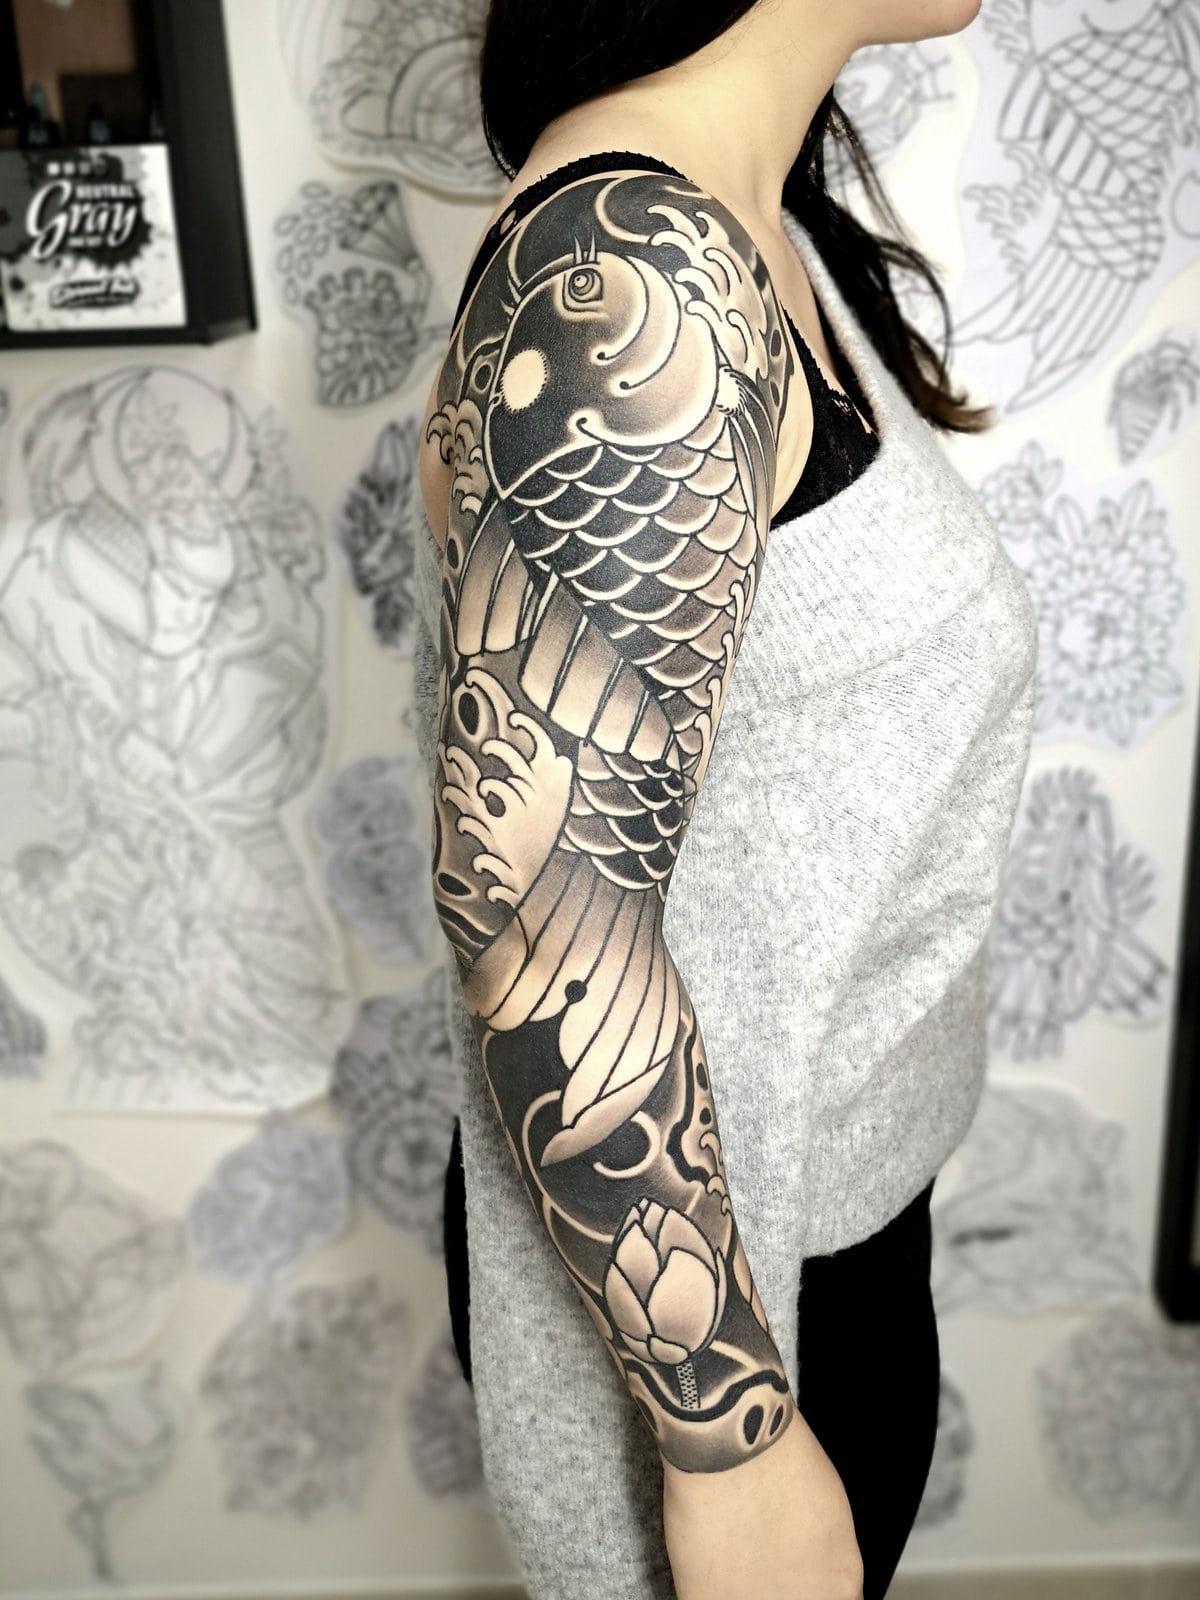 ghis-melou-tattoo-arm-black